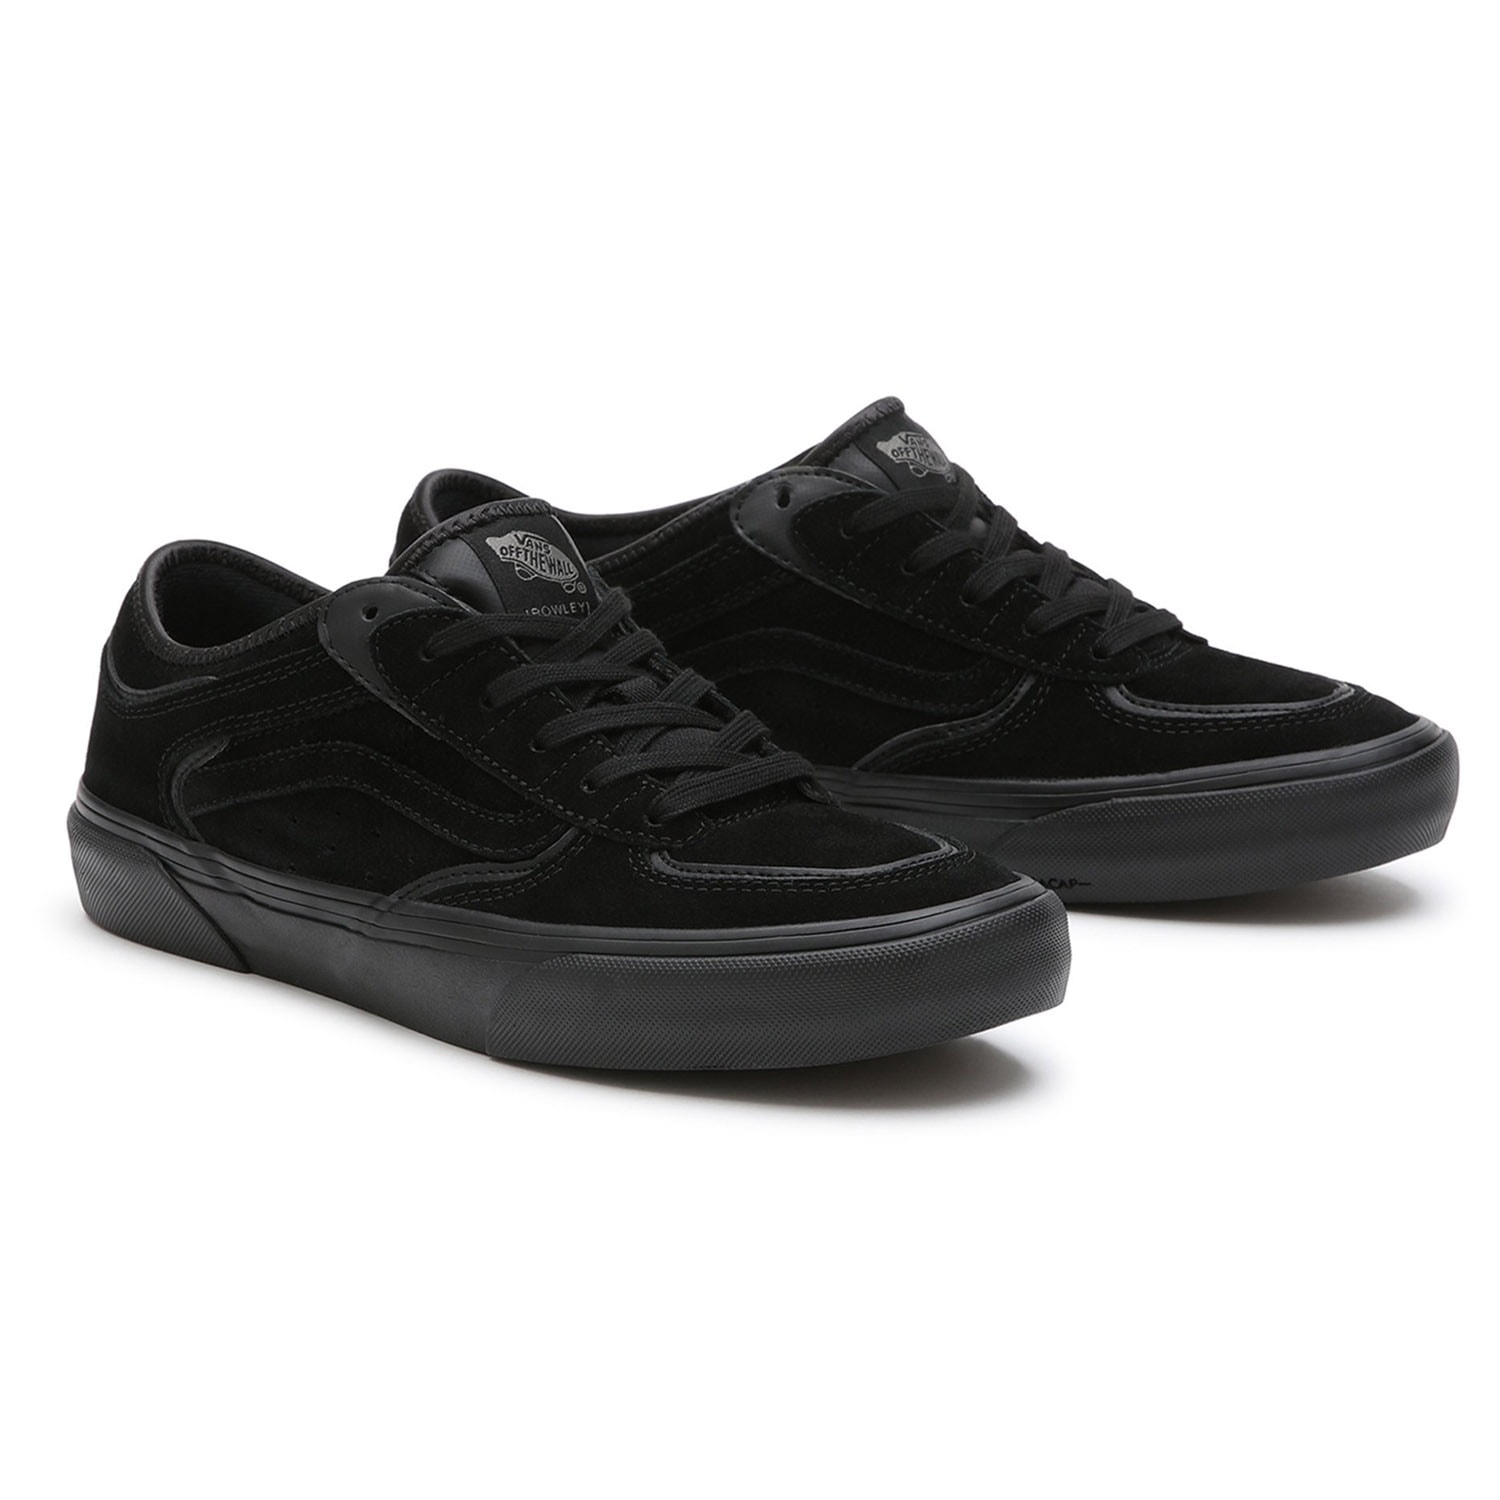 Sneakers Vans Rowley black/black | Snowboard Zezula